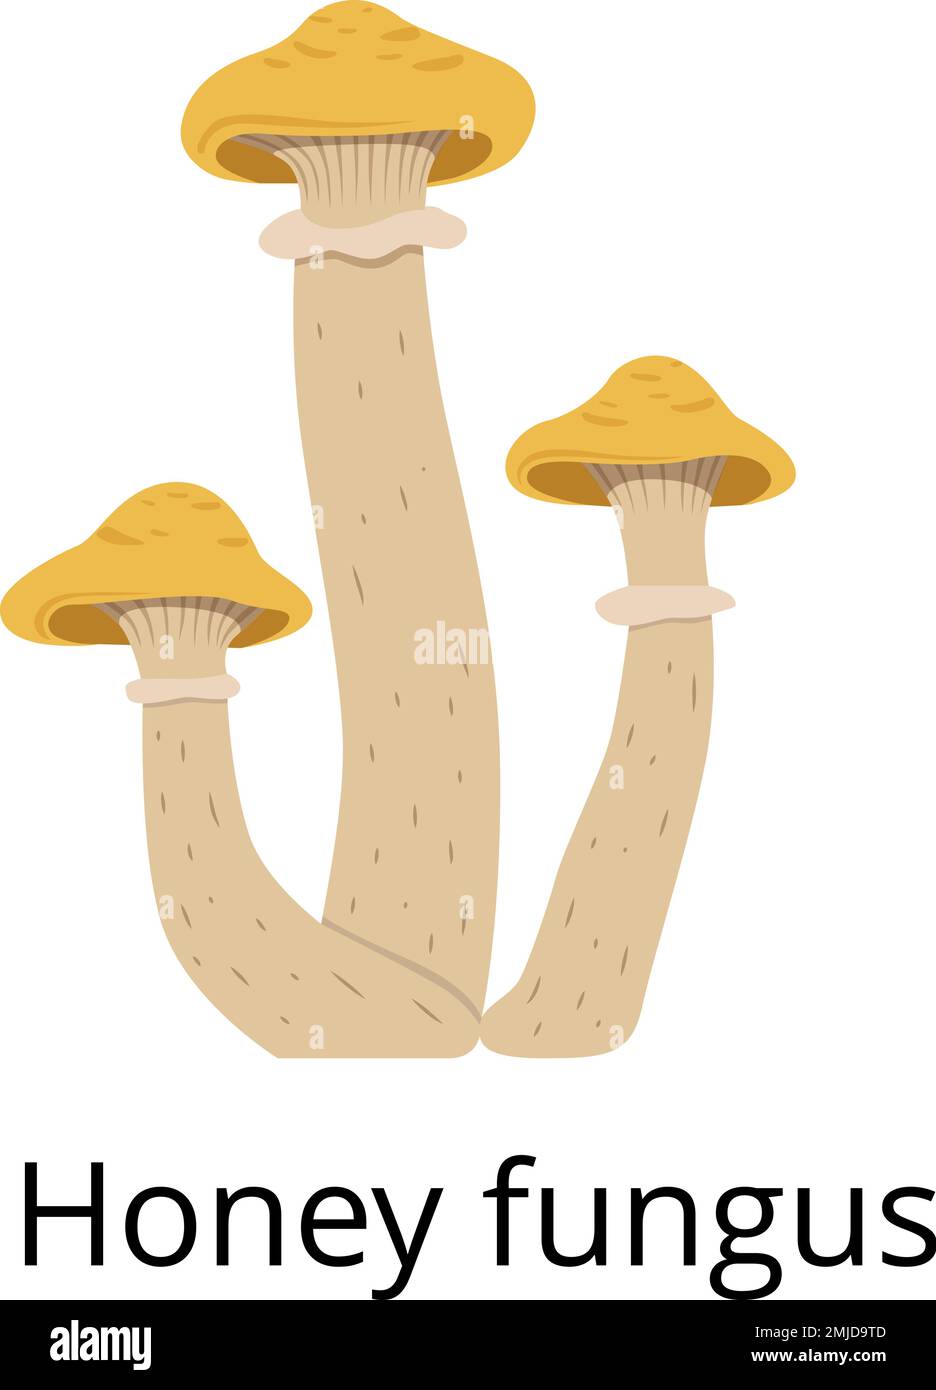 Wild mushroom. Honey fungus icon. Forest nature Stock Vector